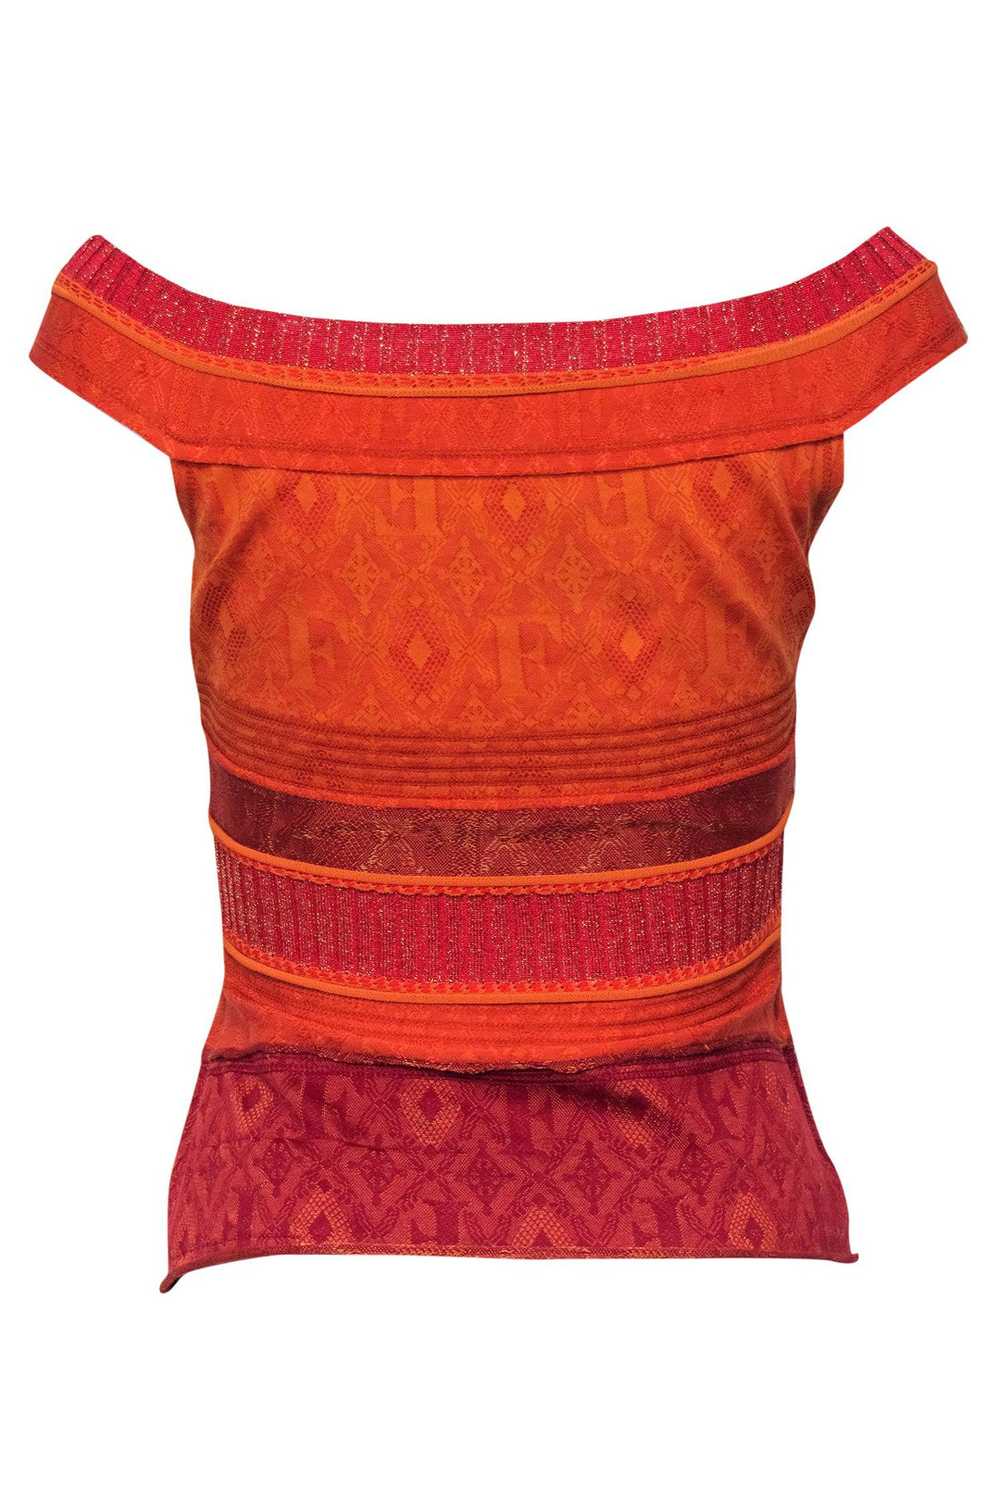 Gianfranco Ferre - Orange Metallic Textured Knit … - image 3